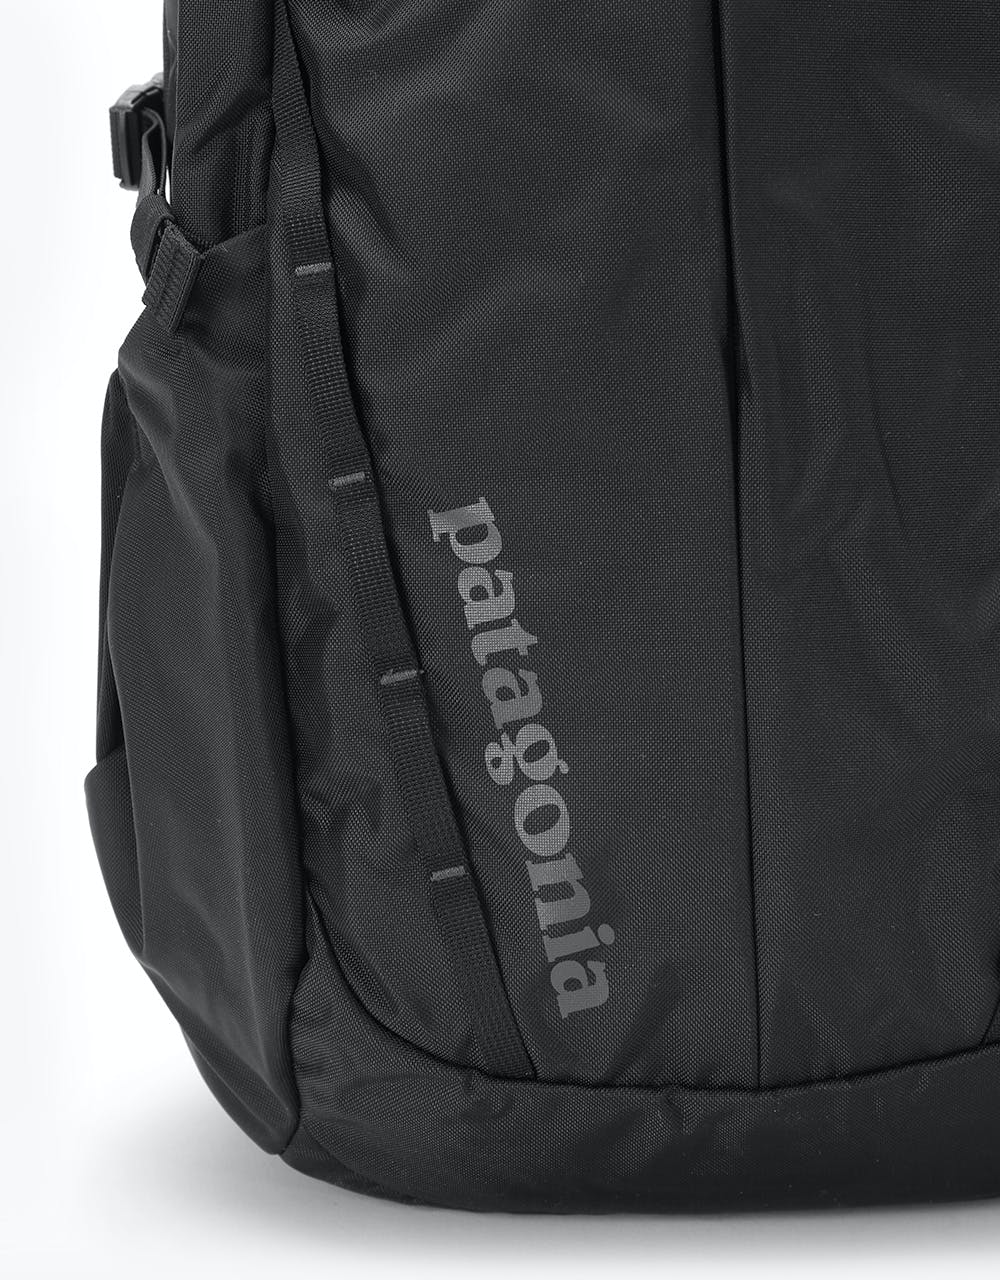 Patagonia Refugio Pack 28L Backpack - Black